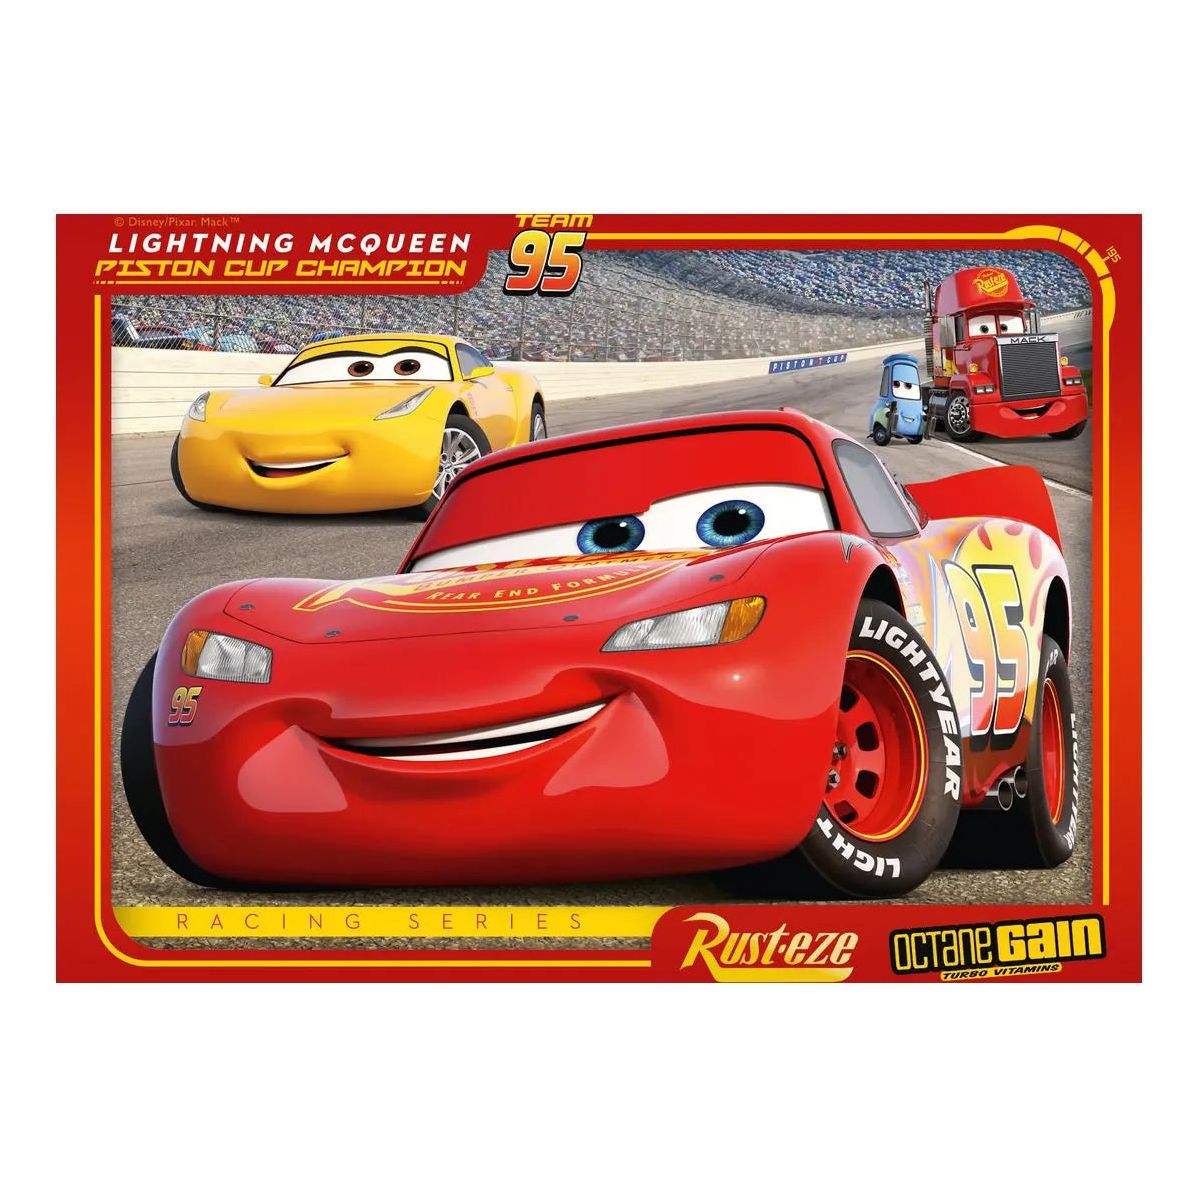 Disney Pixar Cars 4 in a Box Puzzle Ravensburger